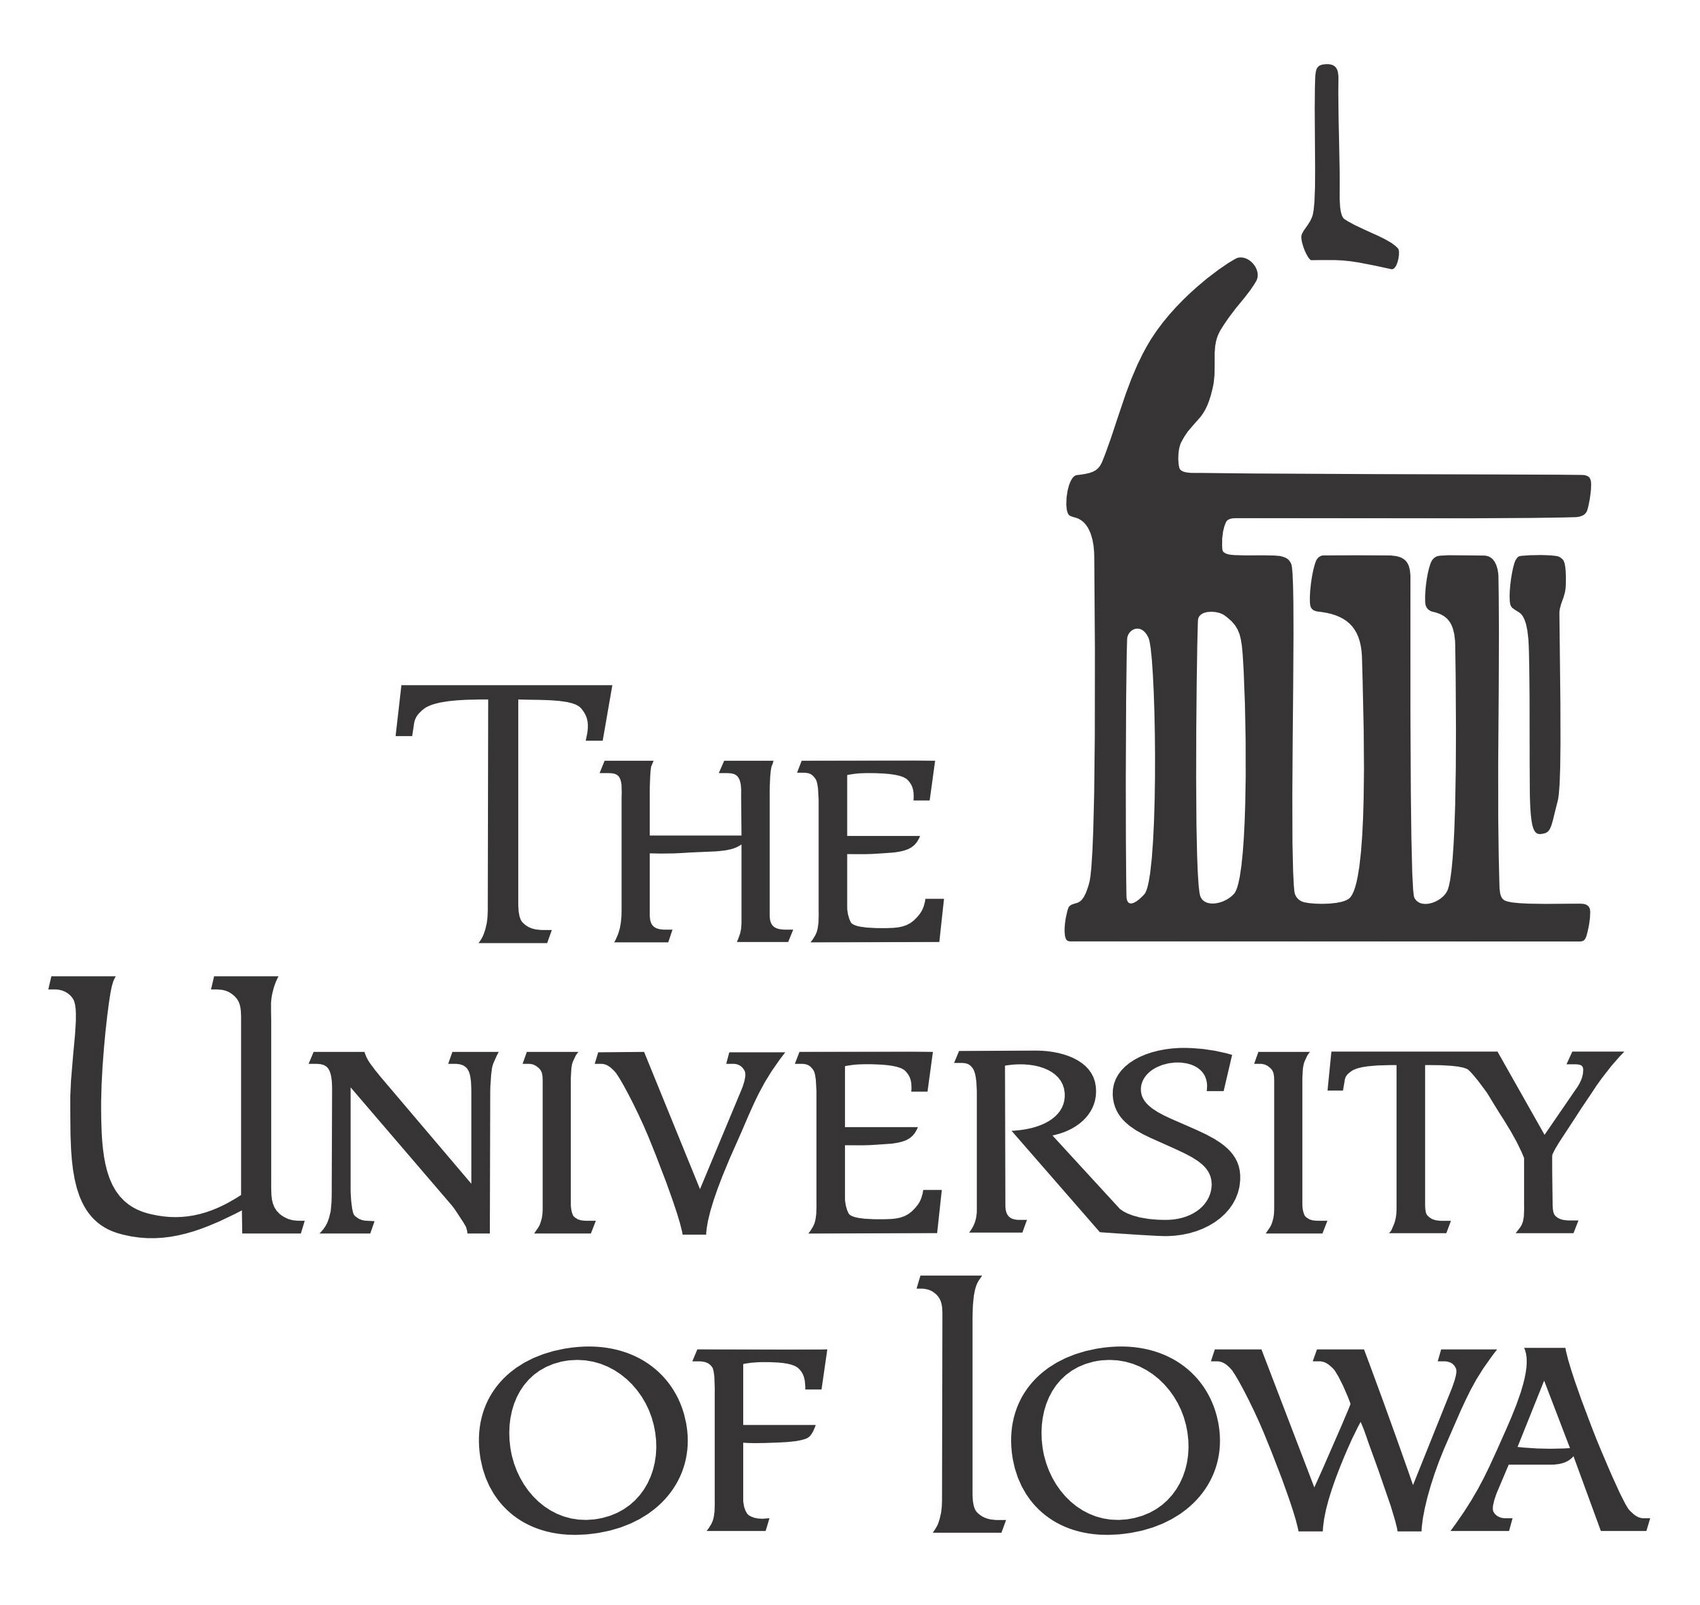 University of Iowa Bachelor's in Data Science